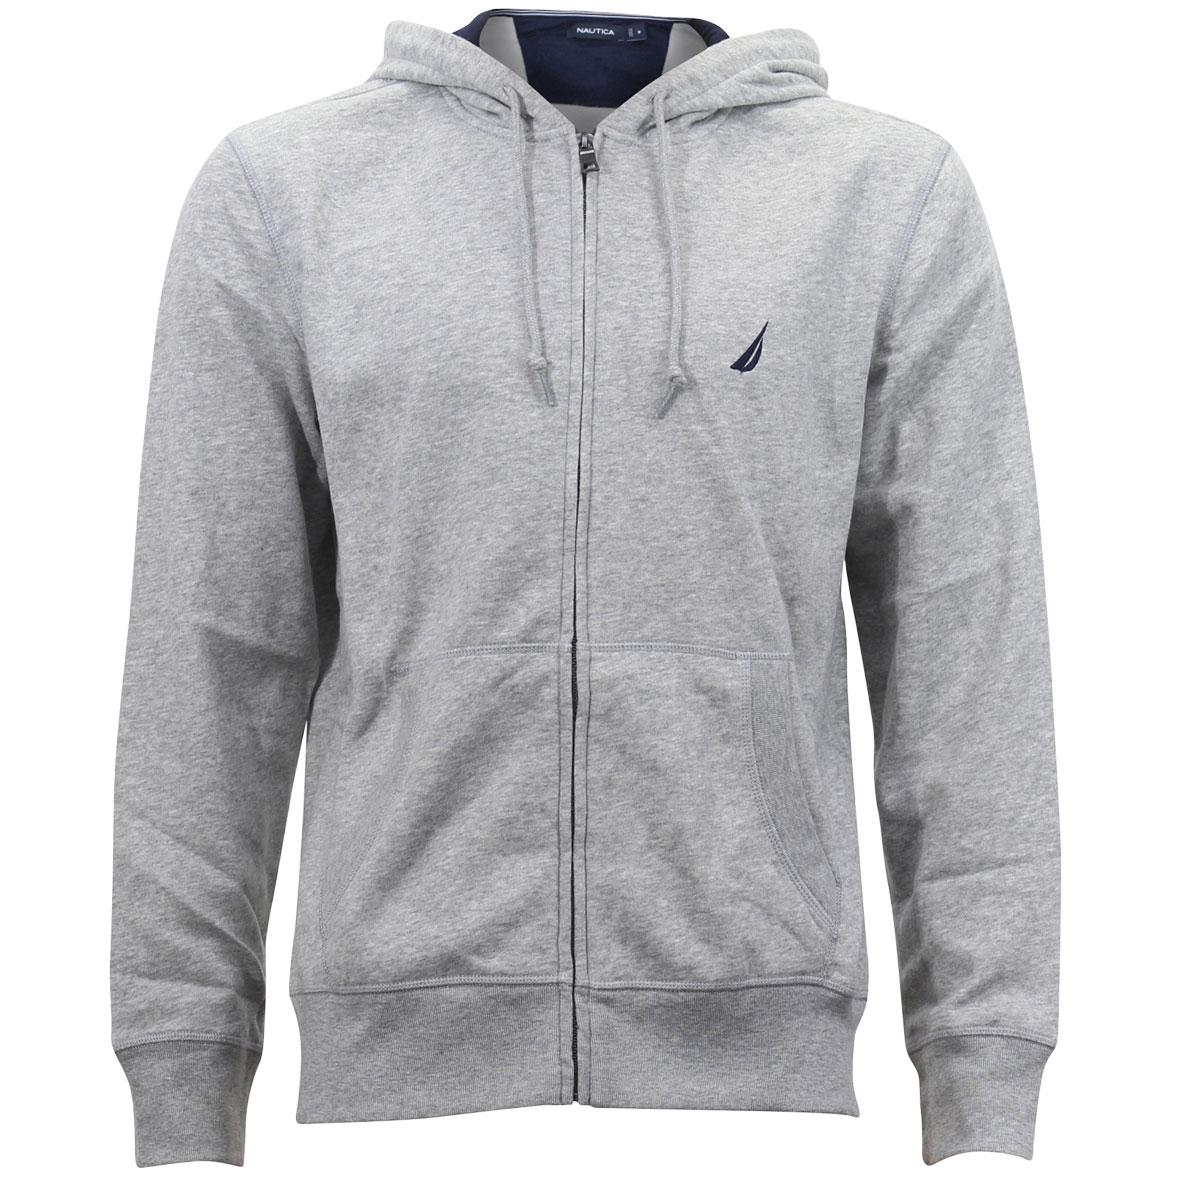 nautica grey hoodie